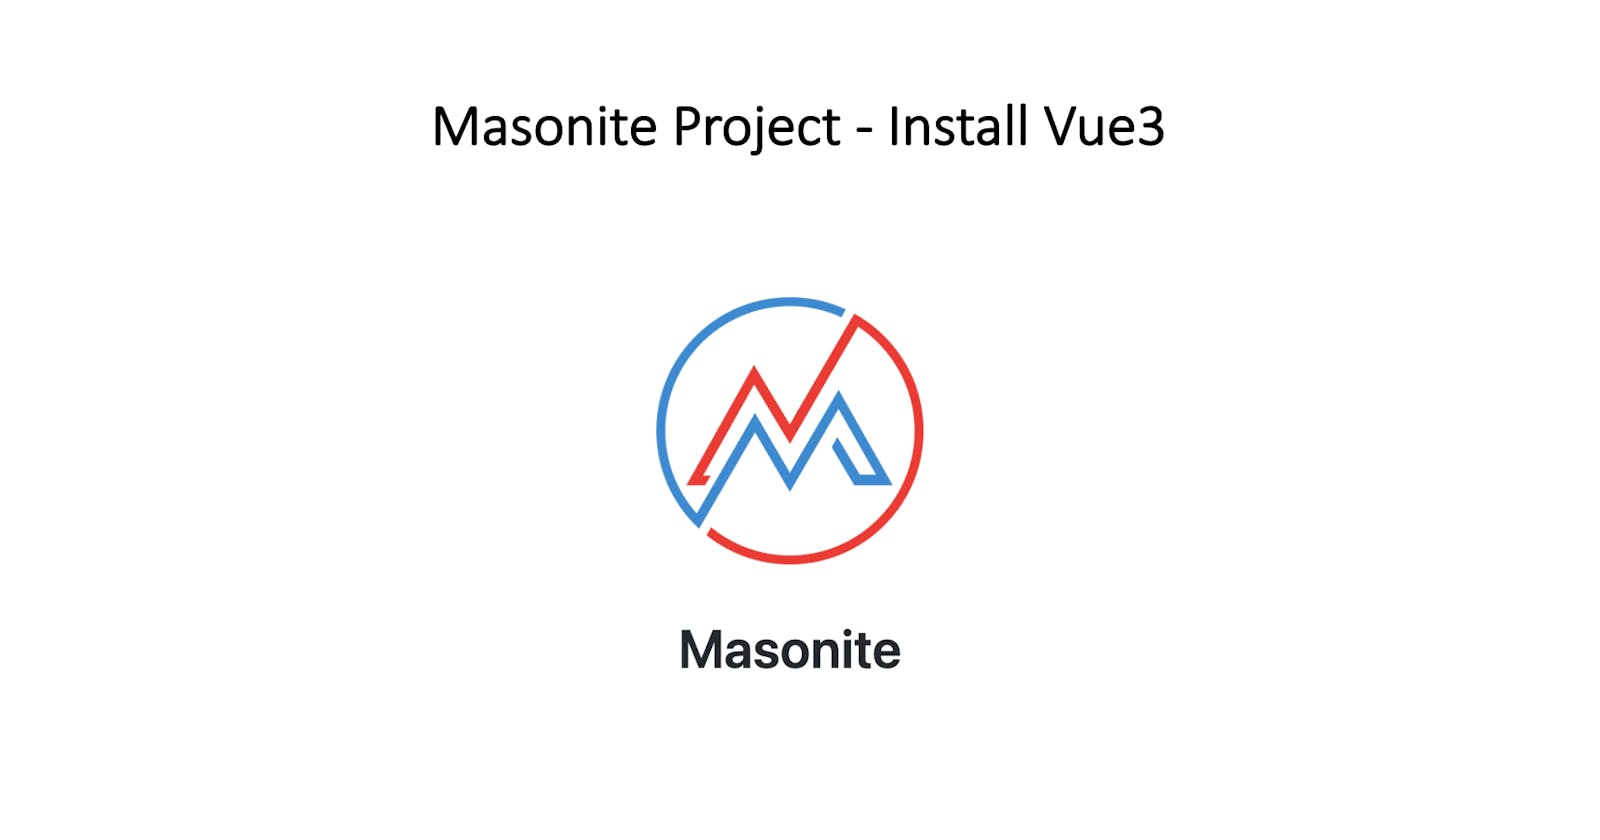 Masonite Project - Install Vue3